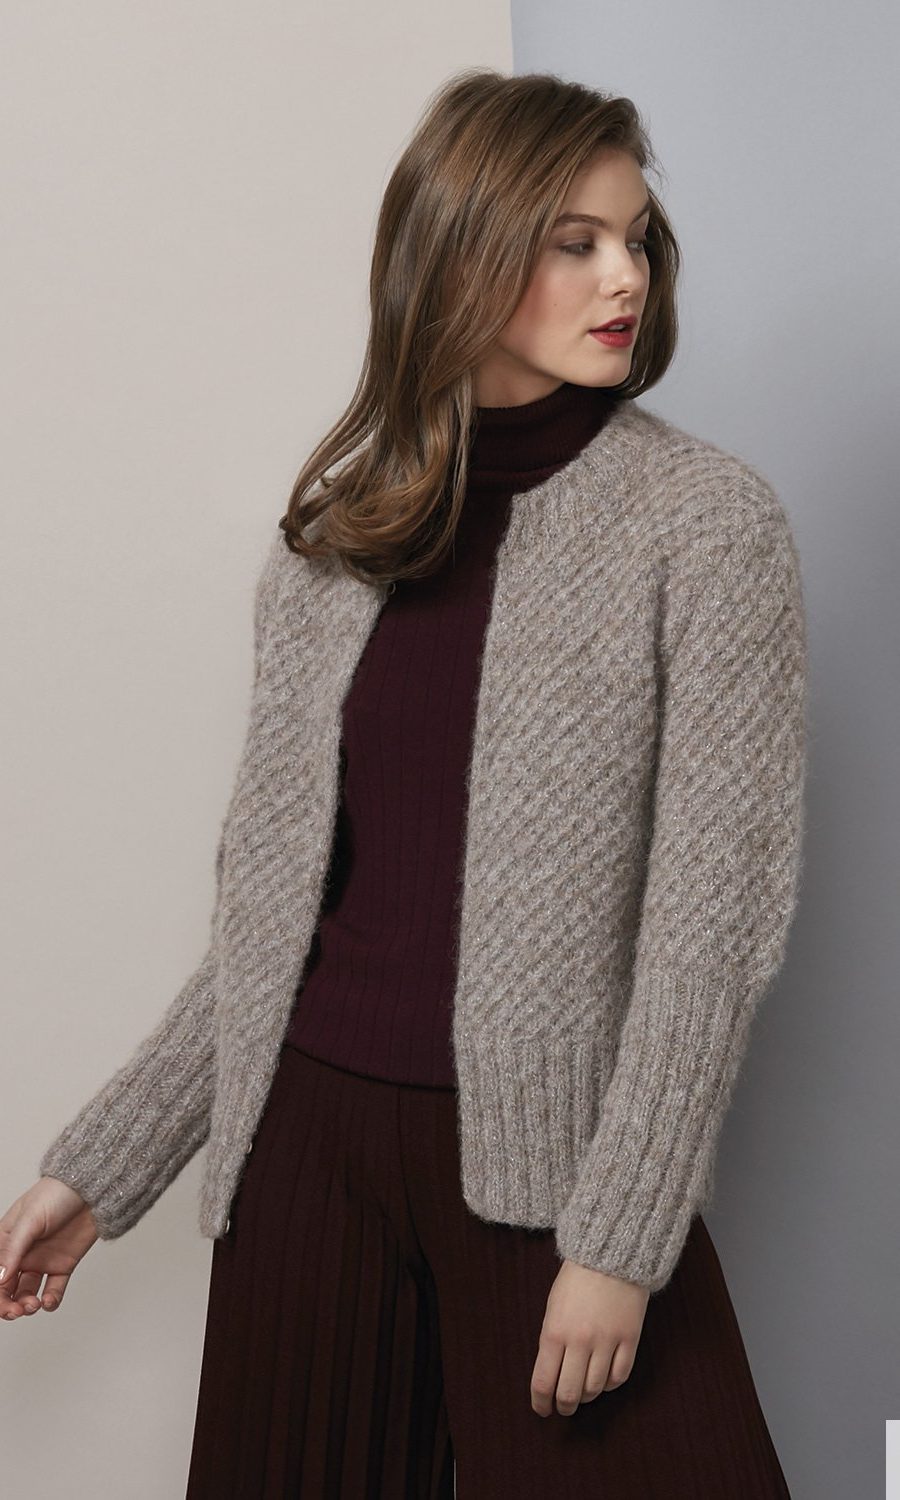 pattern-knit-crochet-woman-jacket-autumn-winter-katia-6136-32-g